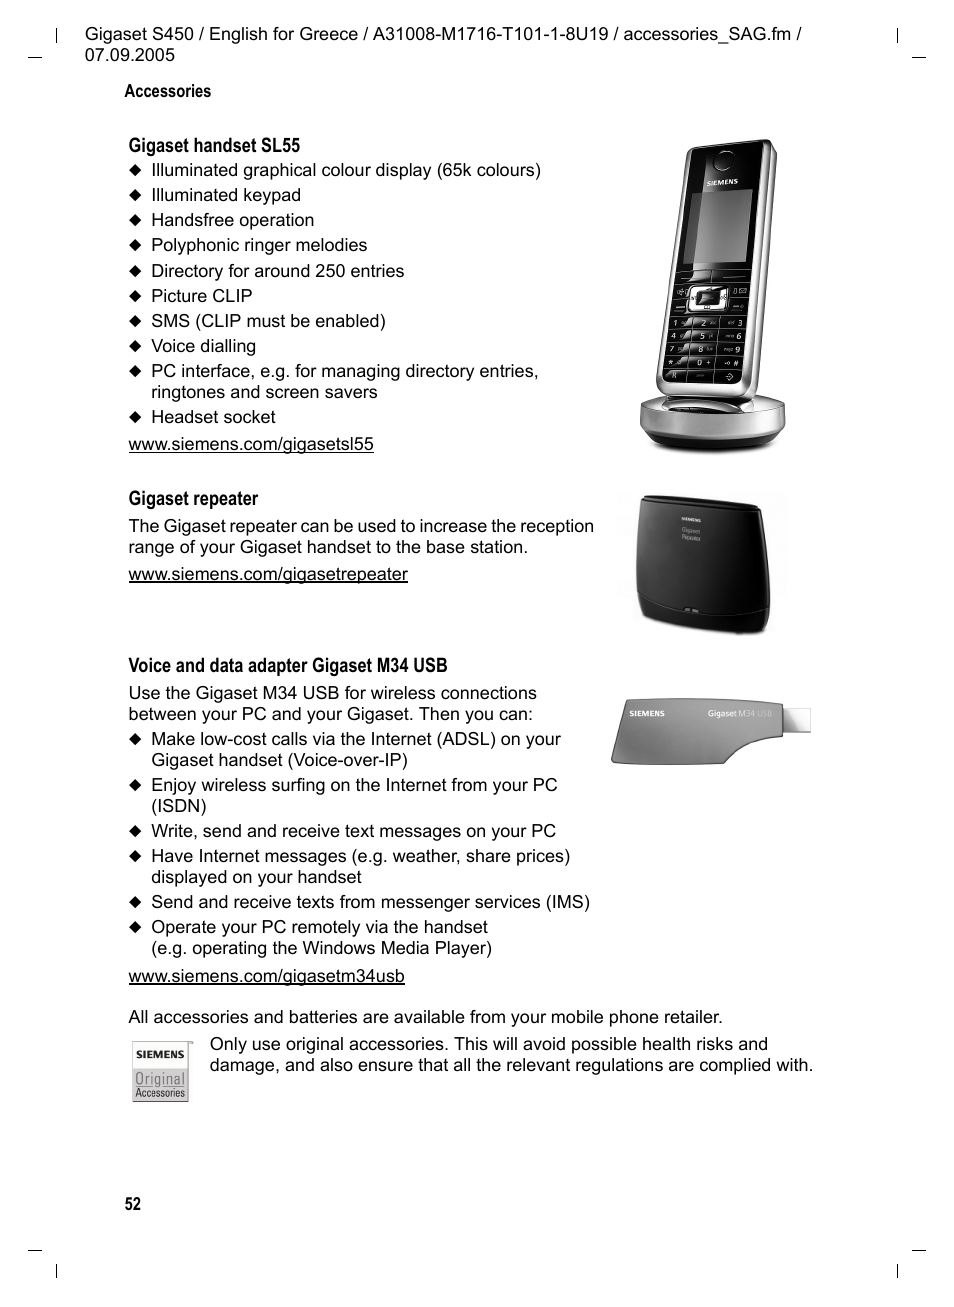 Siemens Gigaset S450 User Manual | Page 53 / 58